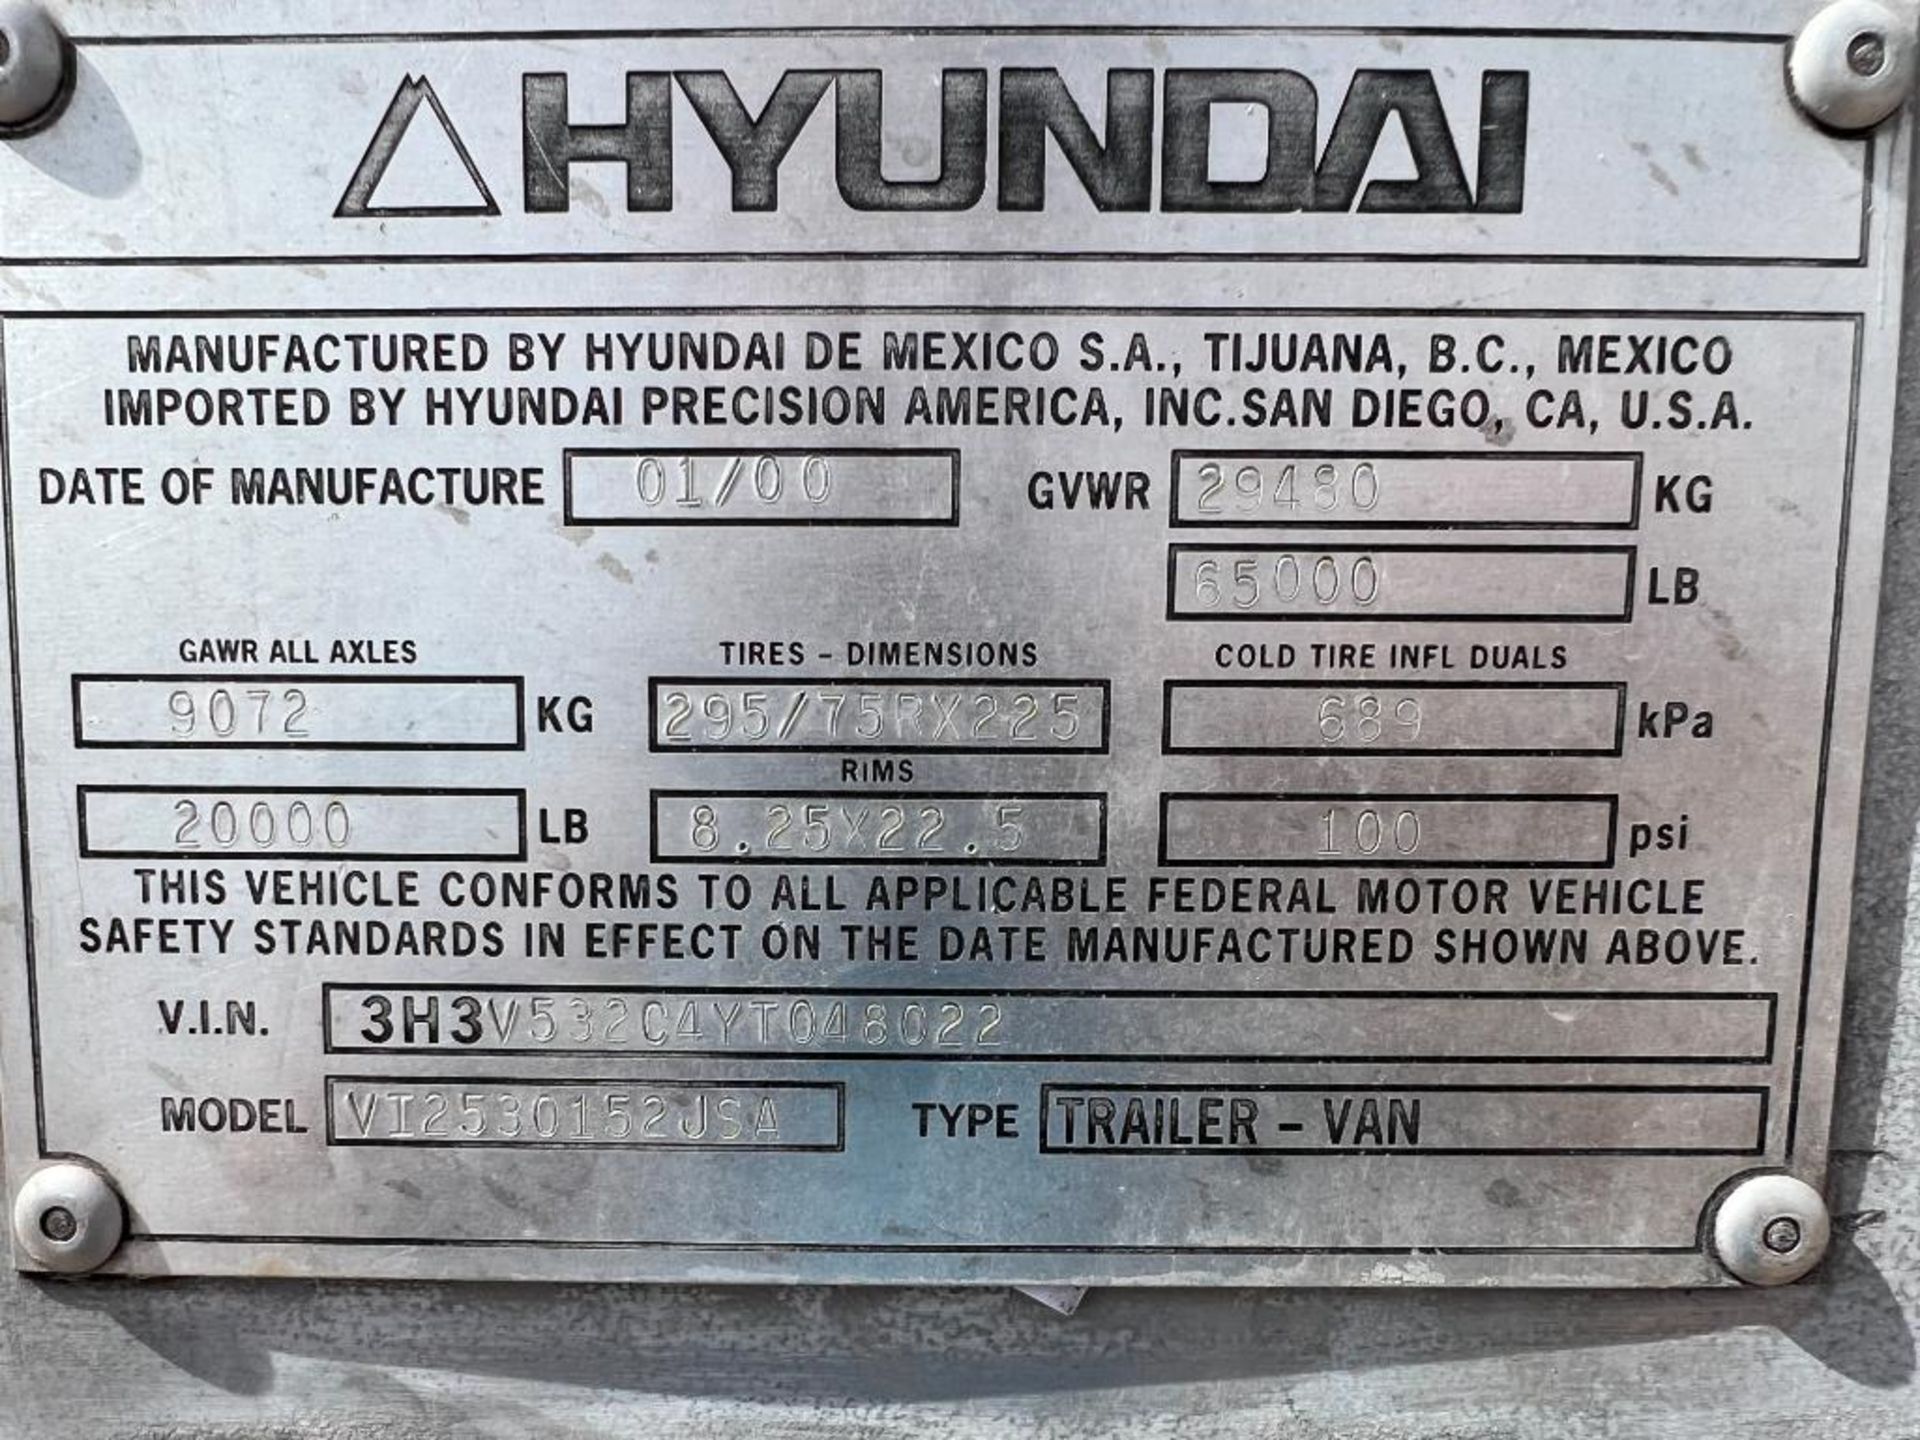 2000 Hyundai VI2530152JSA 53' Dry Van Trailer, VIN: 3H3V532C4YT048022 - Image 8 of 8